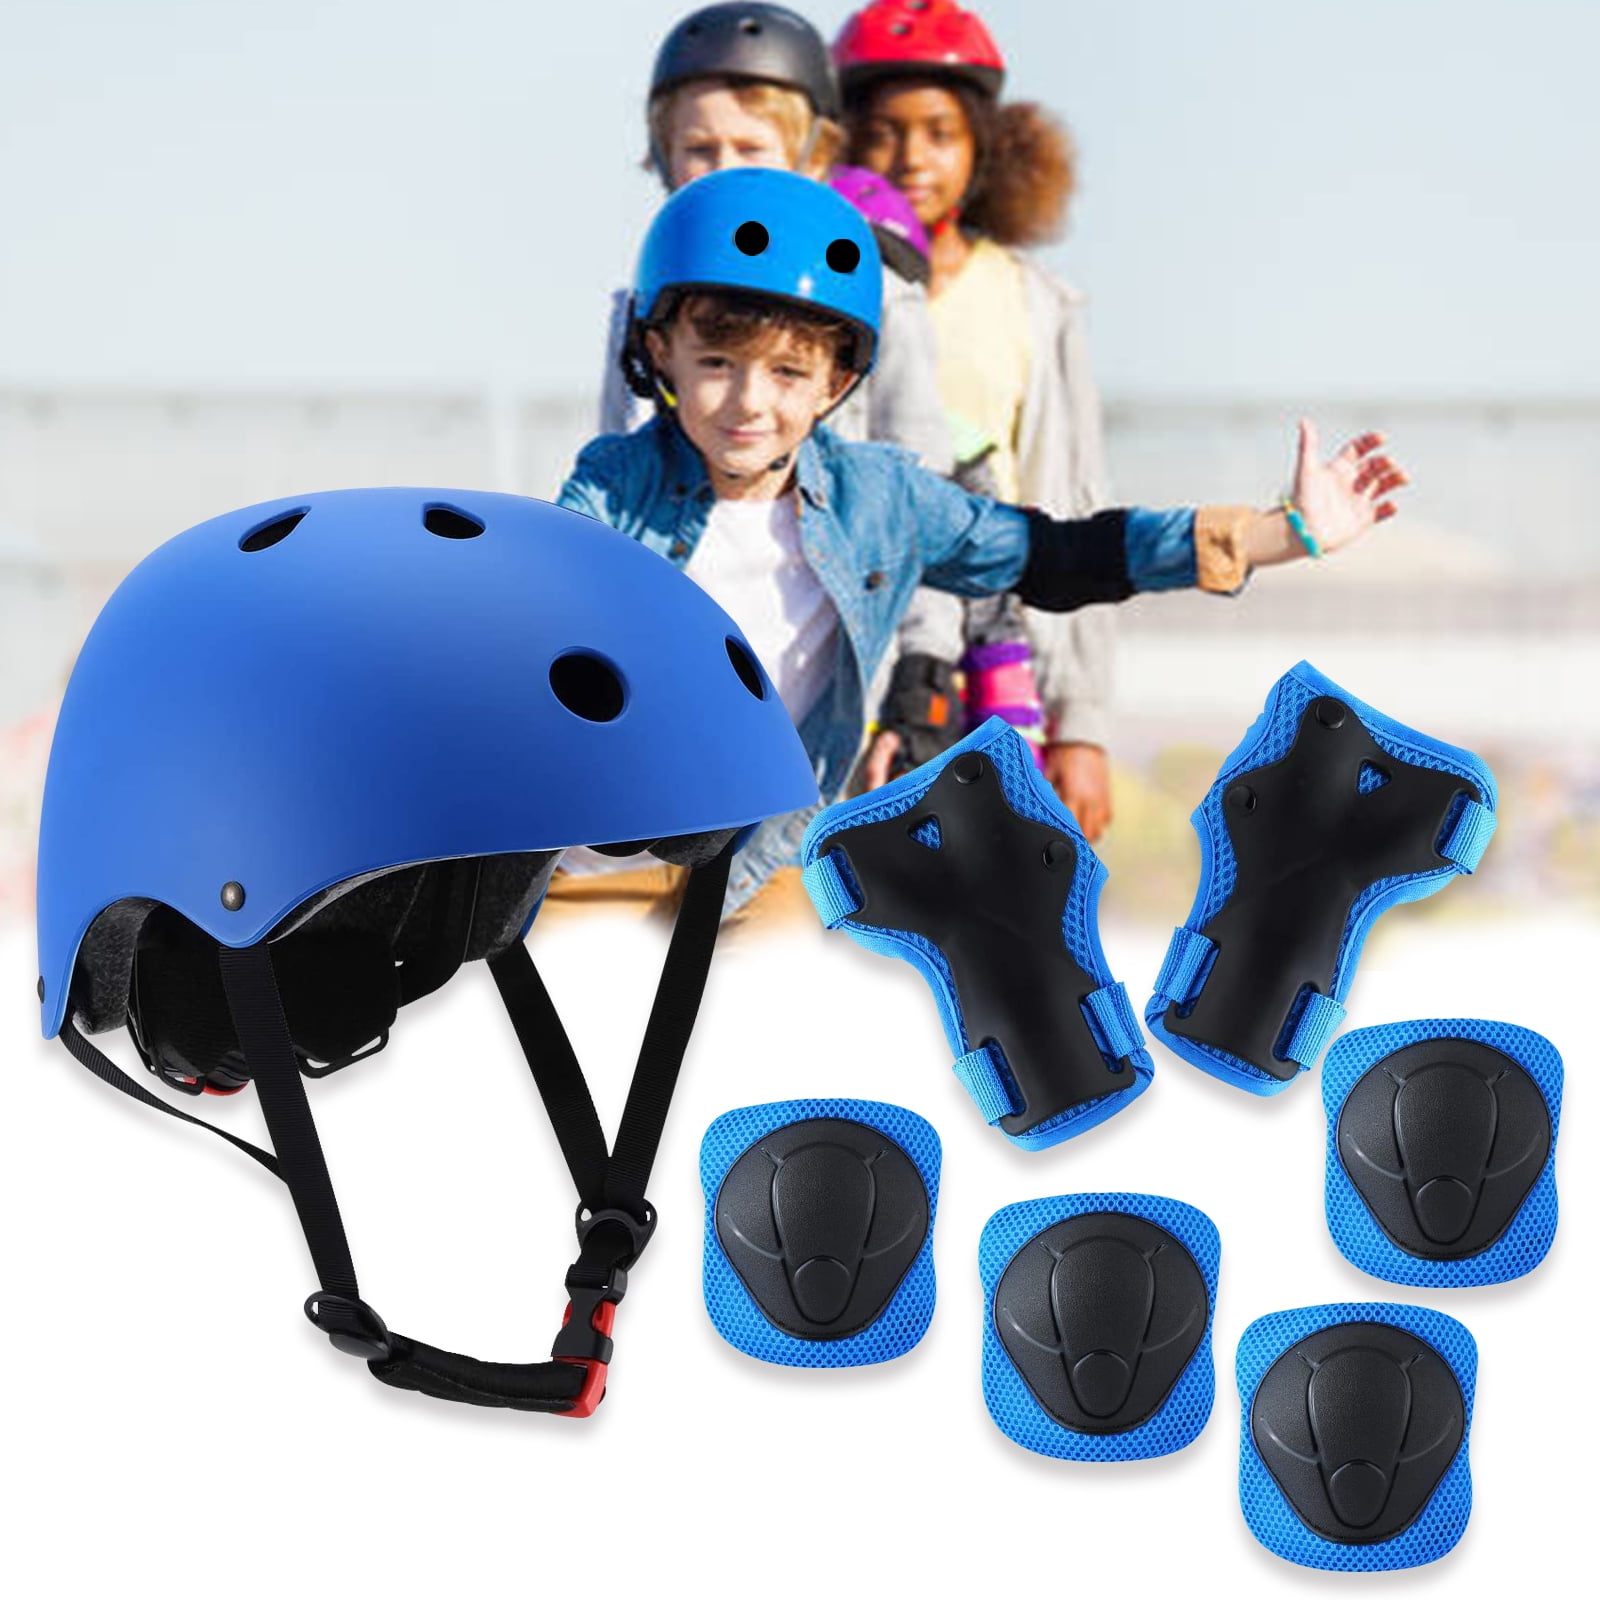 Adjustable Adults Safety Helmet Lightweight Skateboard Helmet for Roller Cycling Skating Boys Girls Children Kids Bike Helmet for Toddlers Age 3 to 13 with Protective Gear Set 